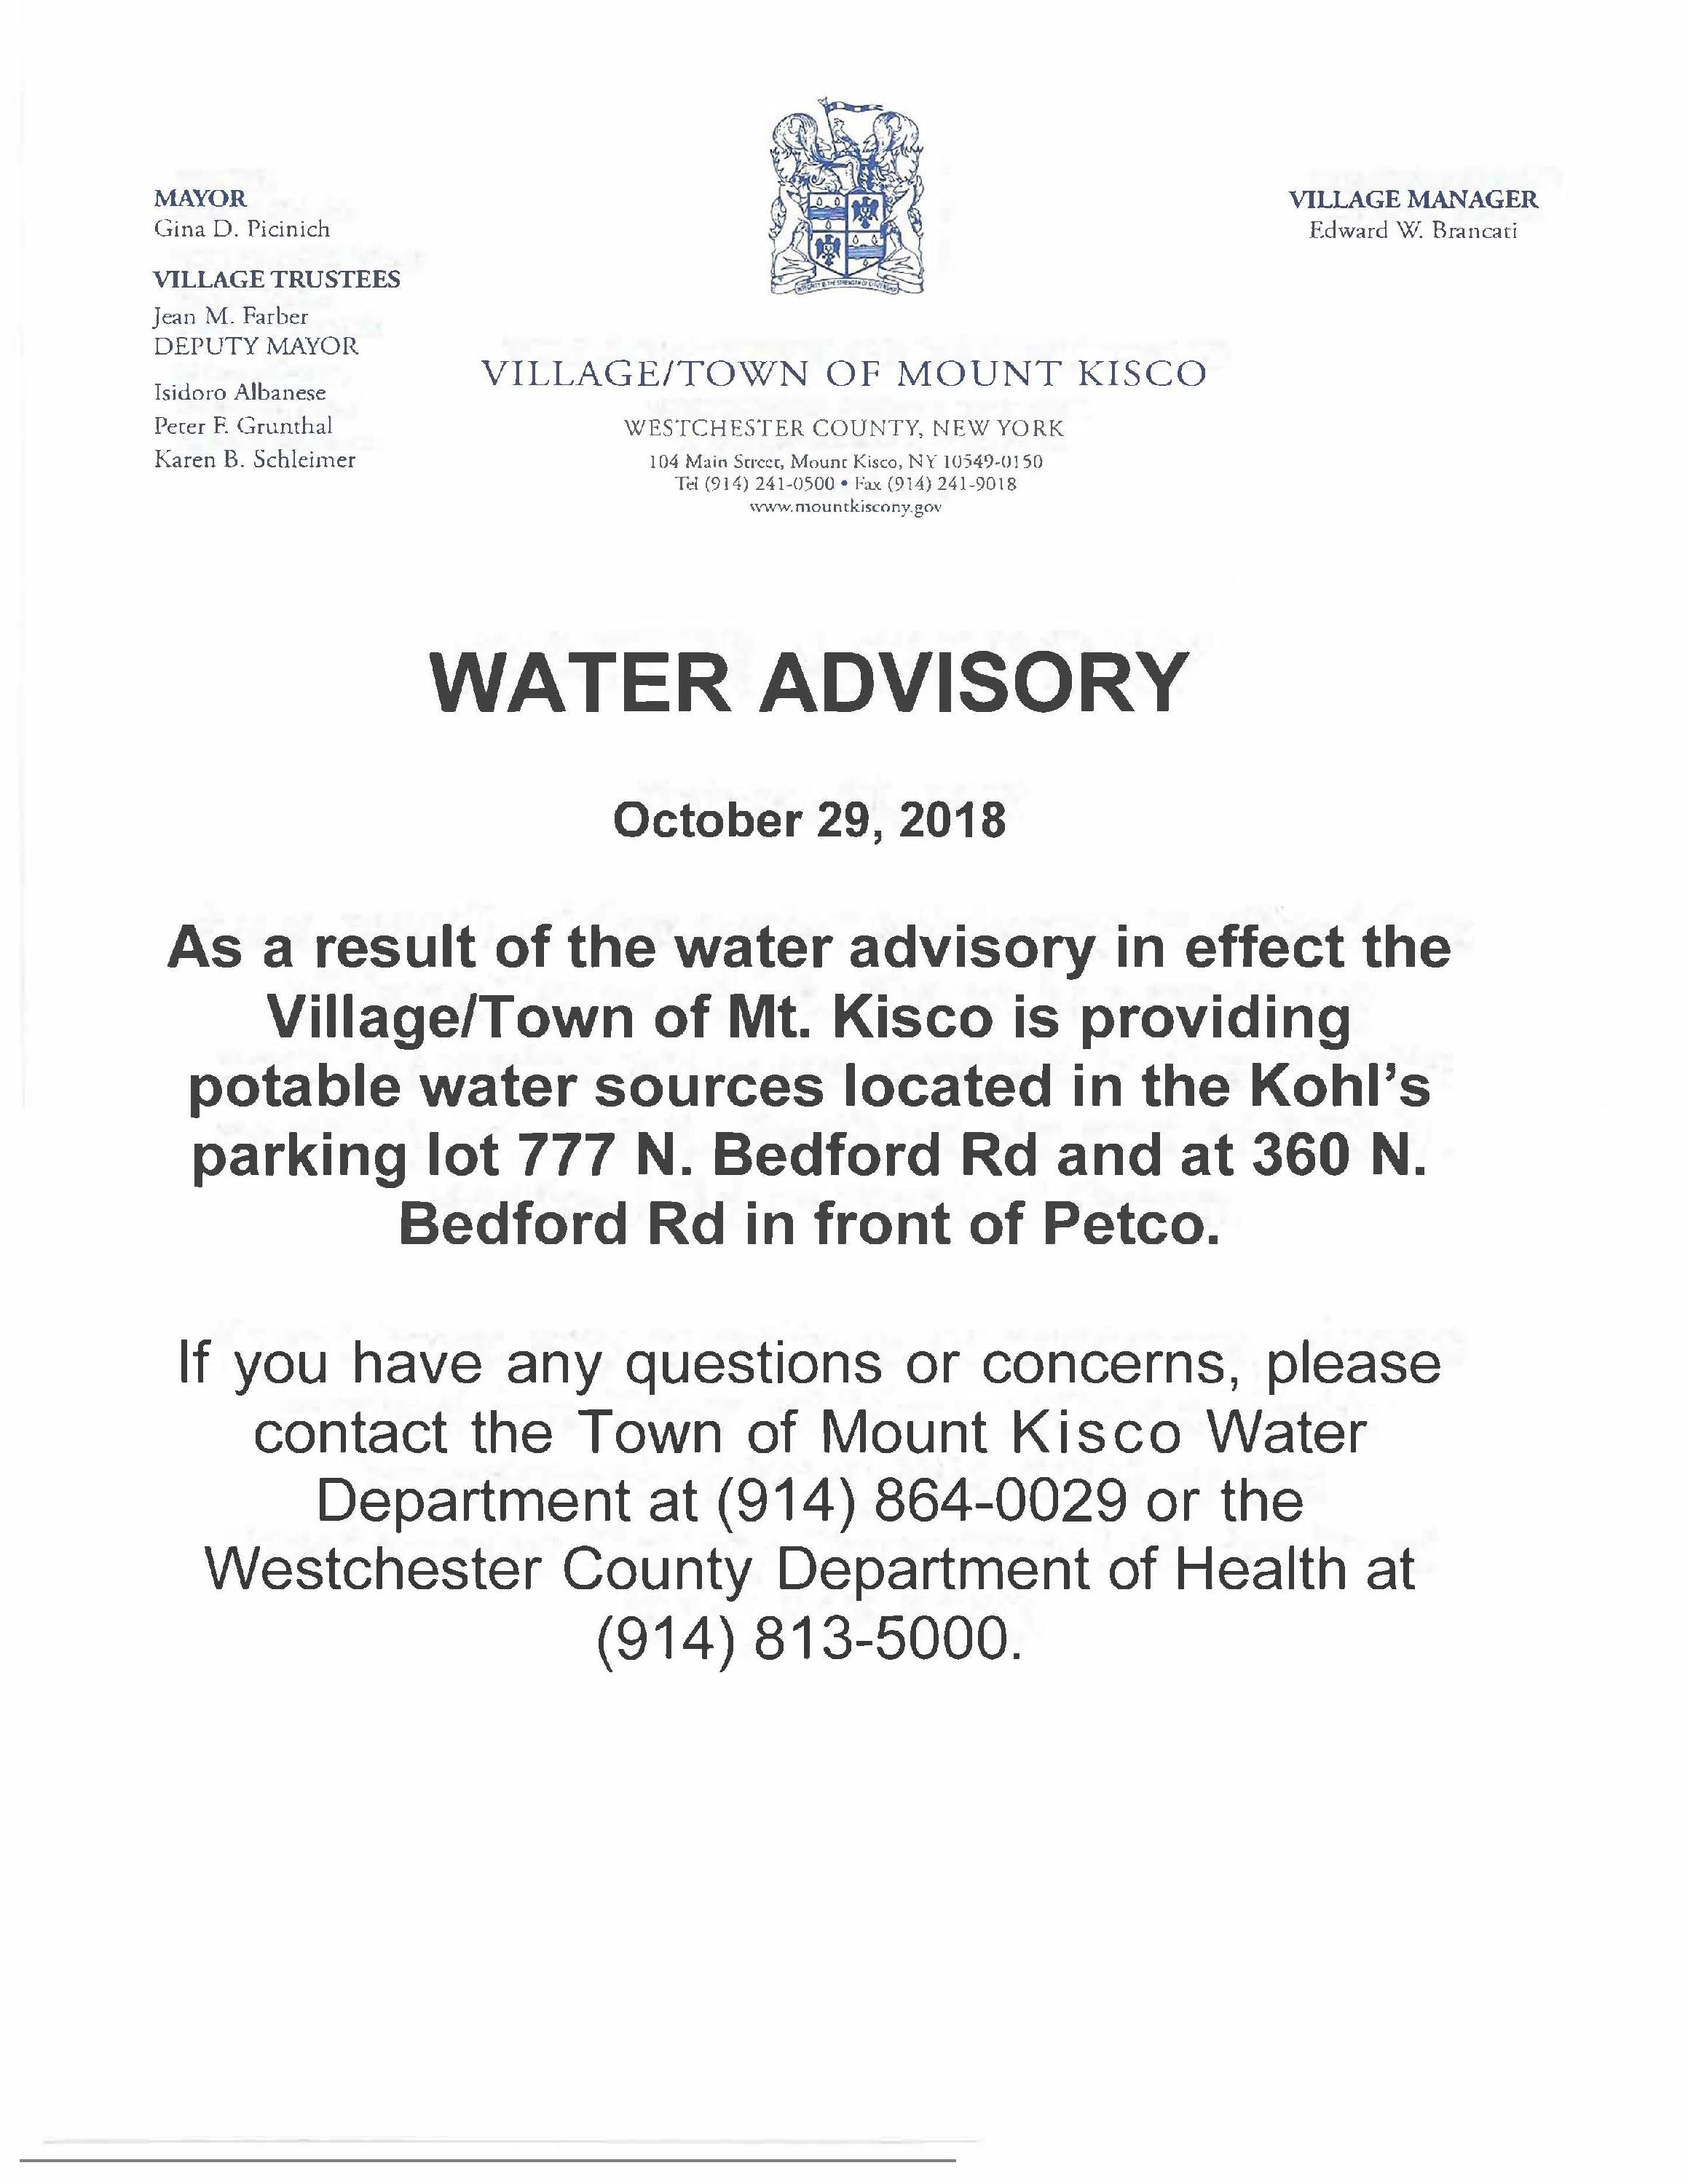 Water Advisory Notice (002)